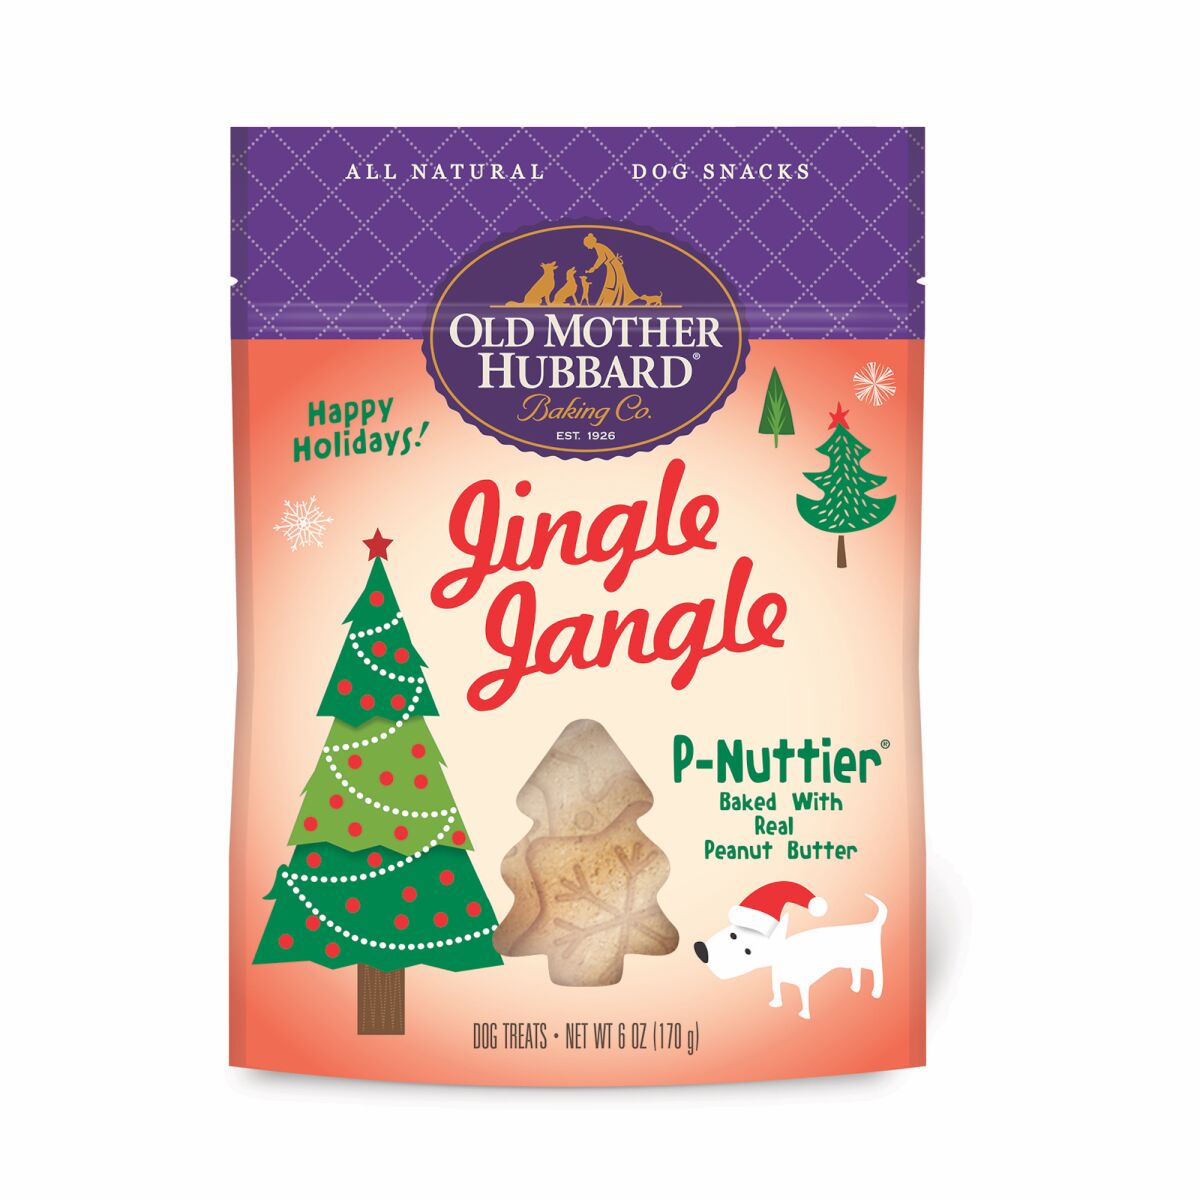 Jingle jangle treat